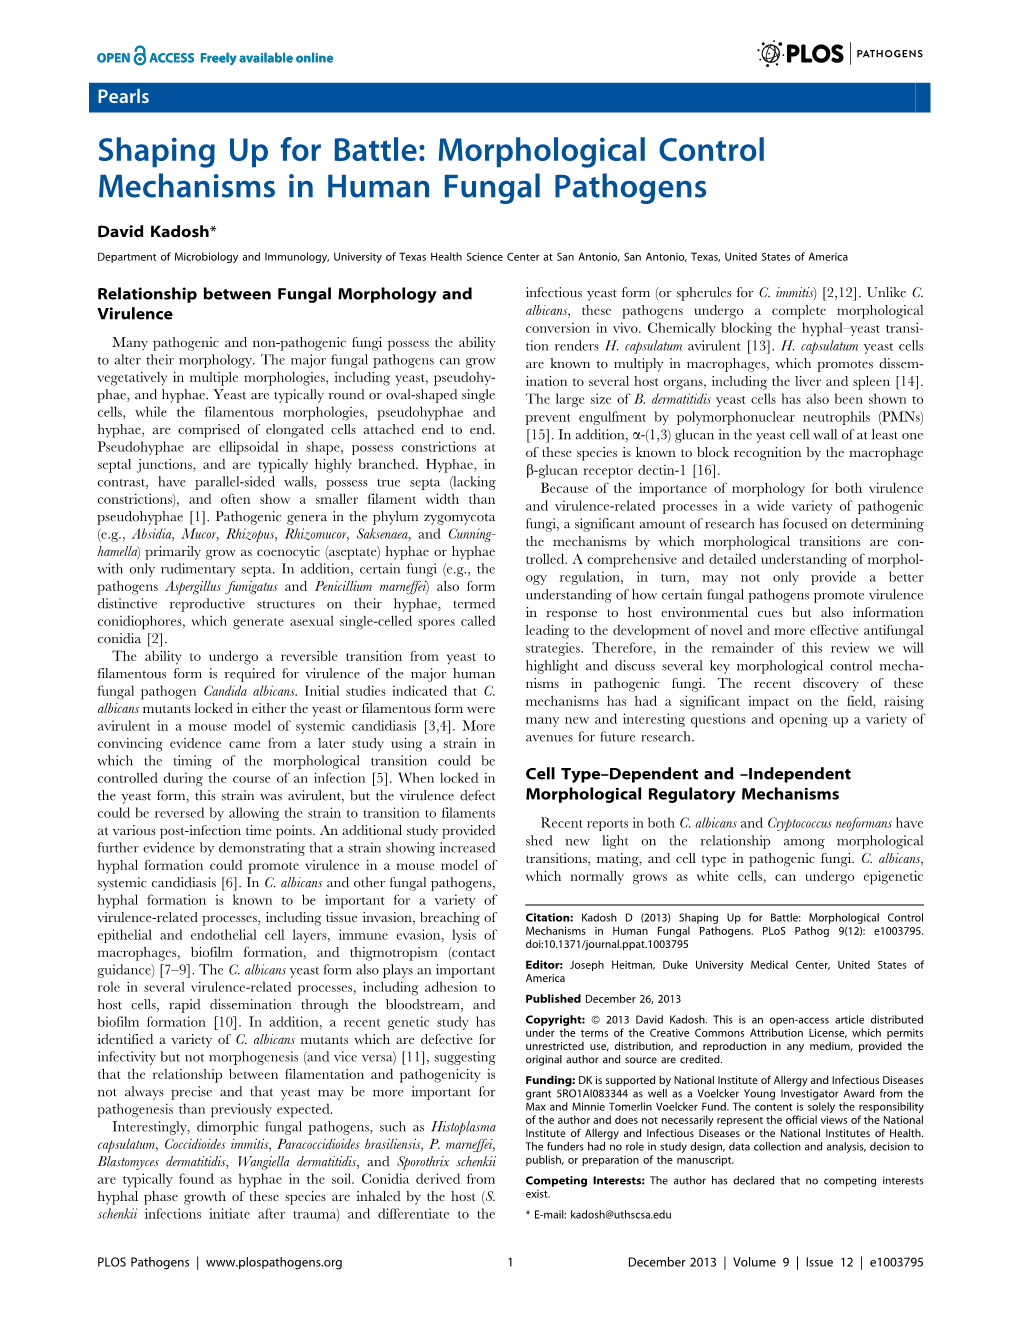 Morphological Control Mechanisms in Human Fungal Pathogens